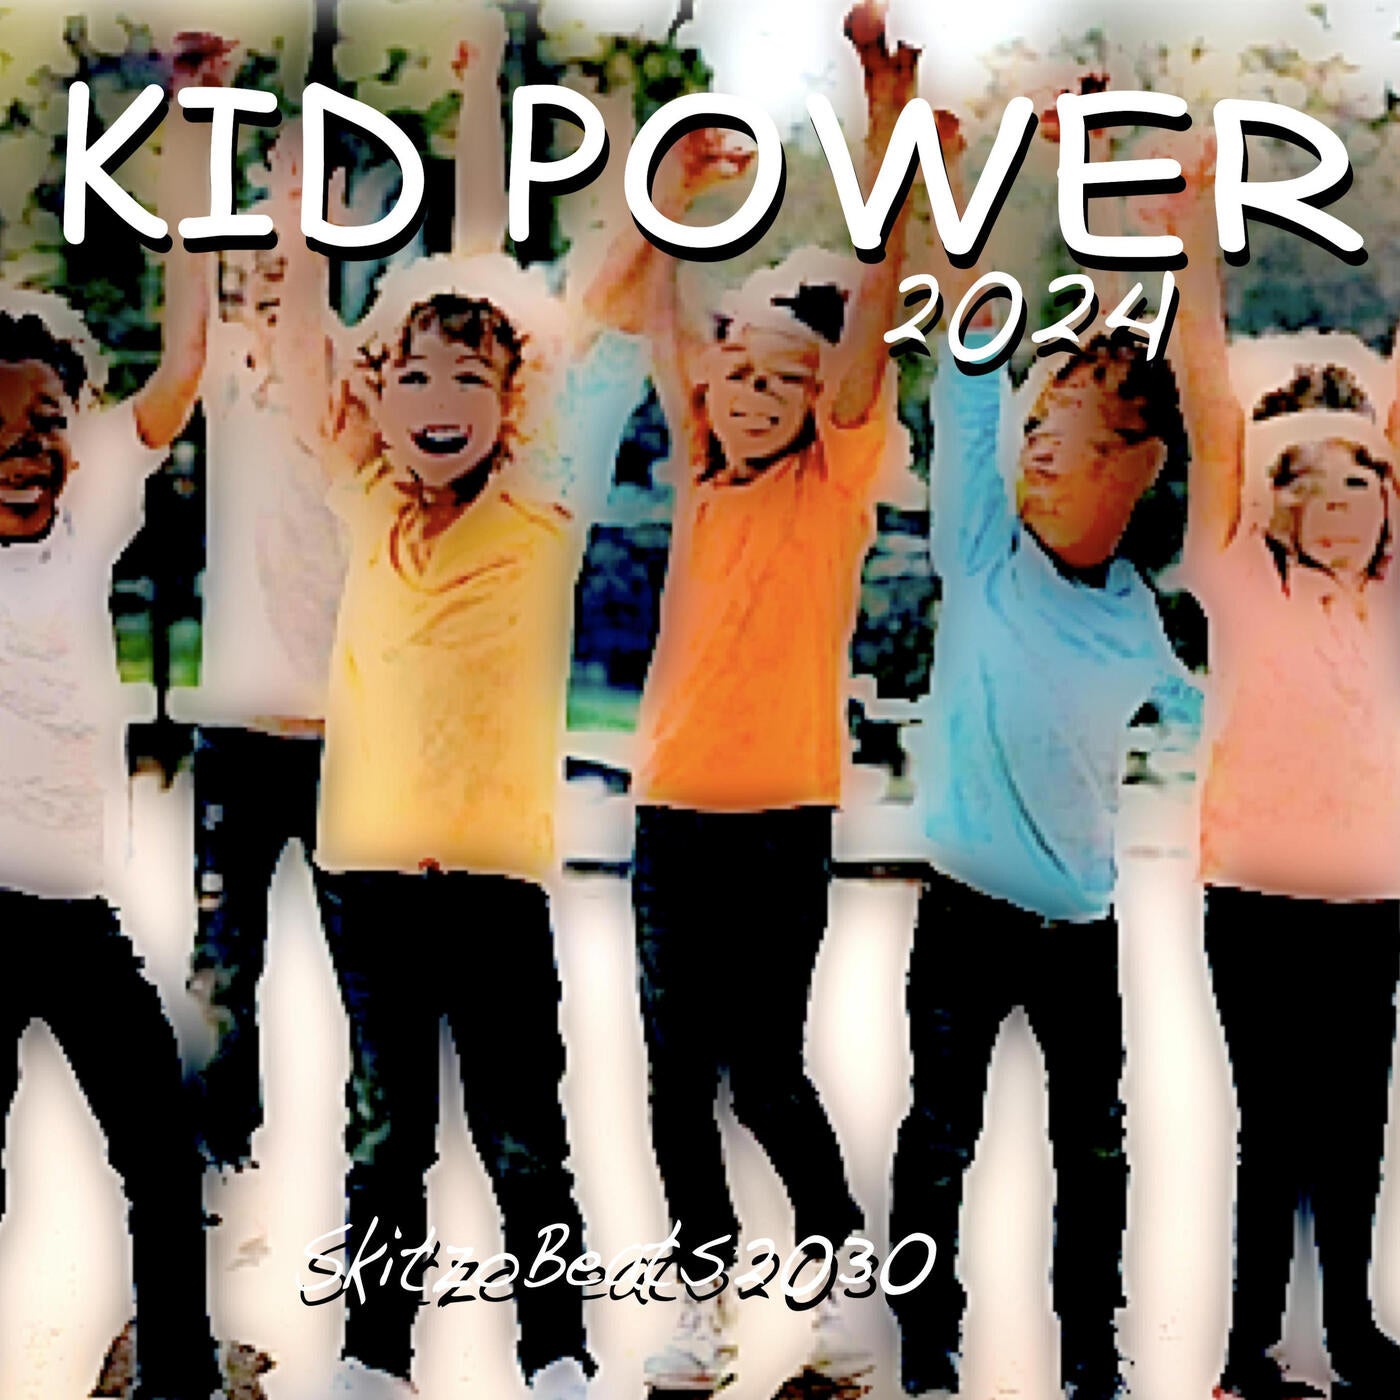 SkitzoBeats2030 - Kid Power 2024 [DistroKid] | Music & Downloads 